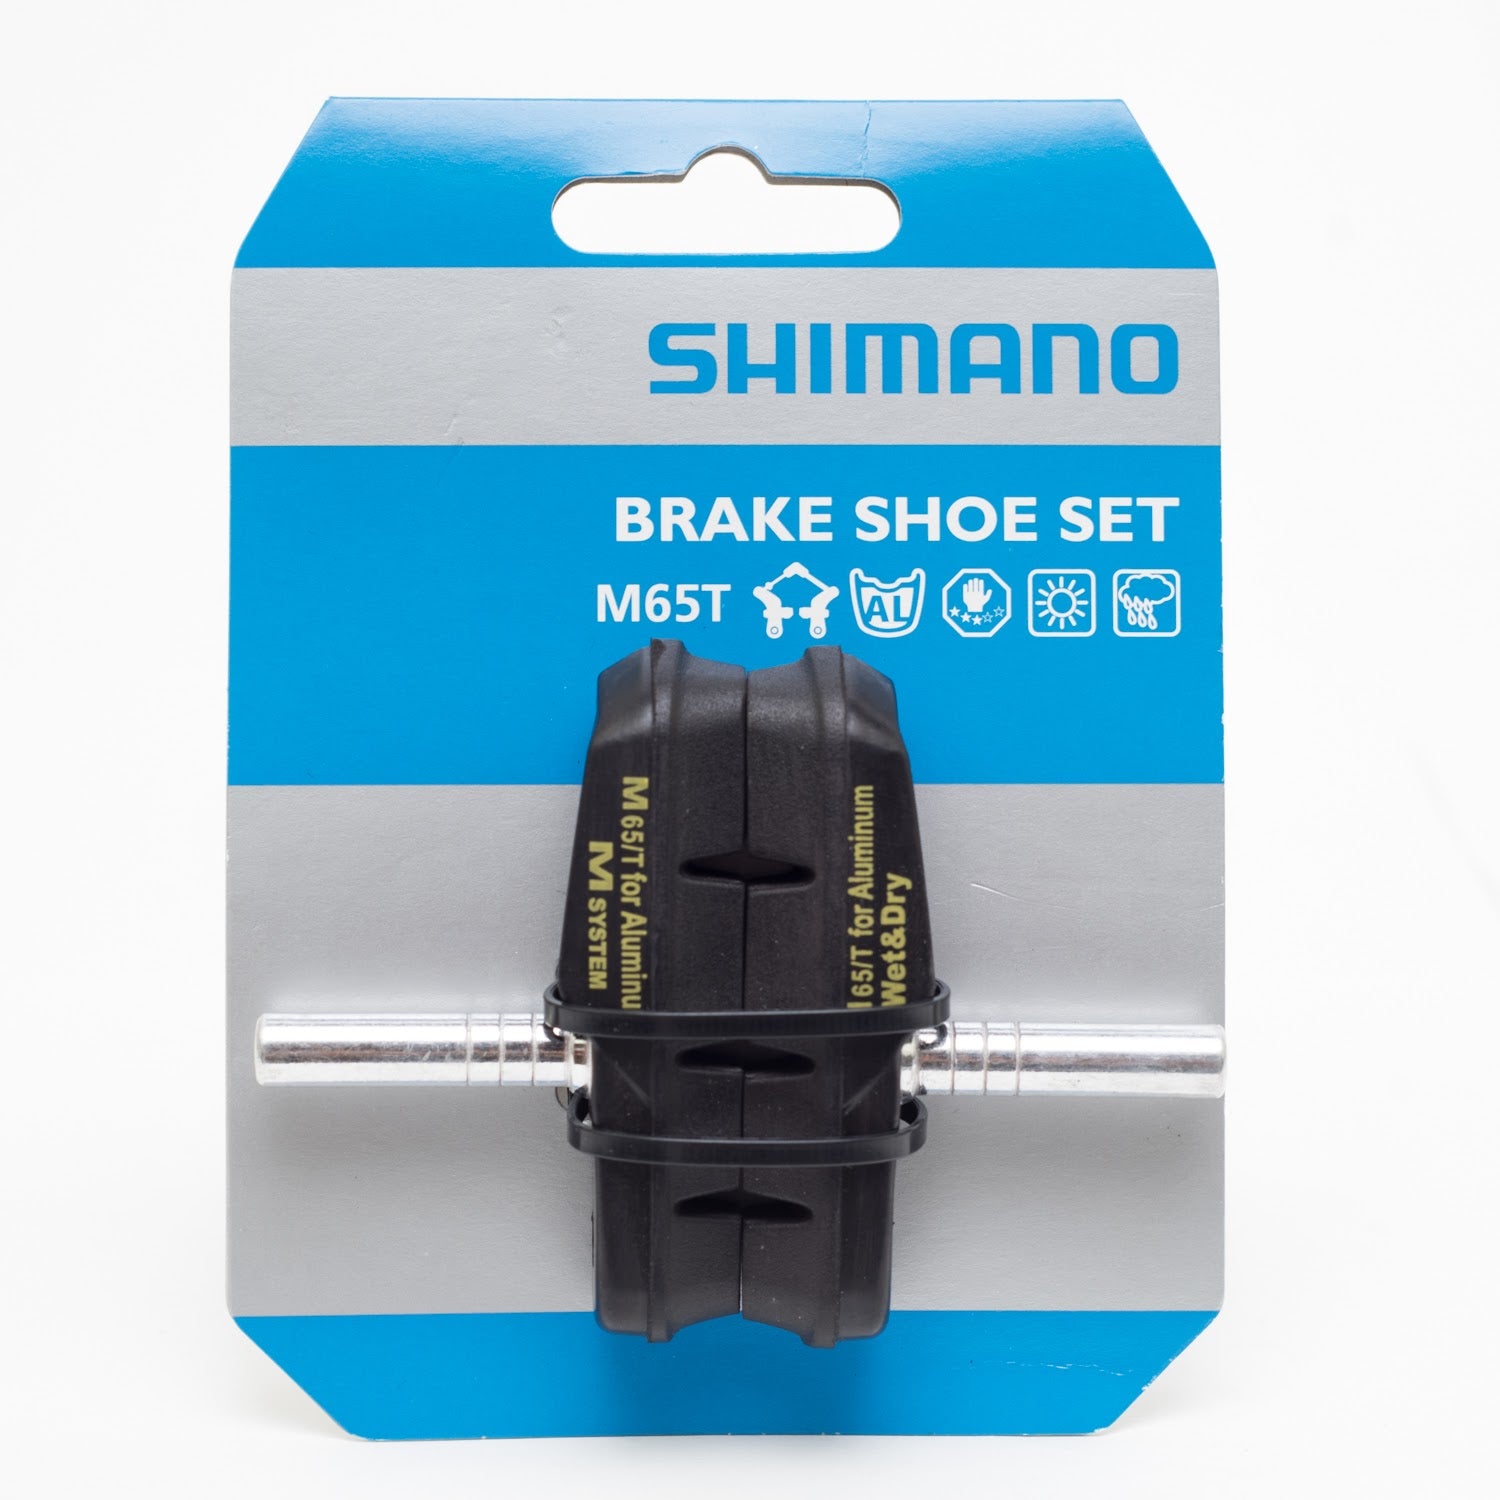 SHIMANO Break Shoe Set M65T